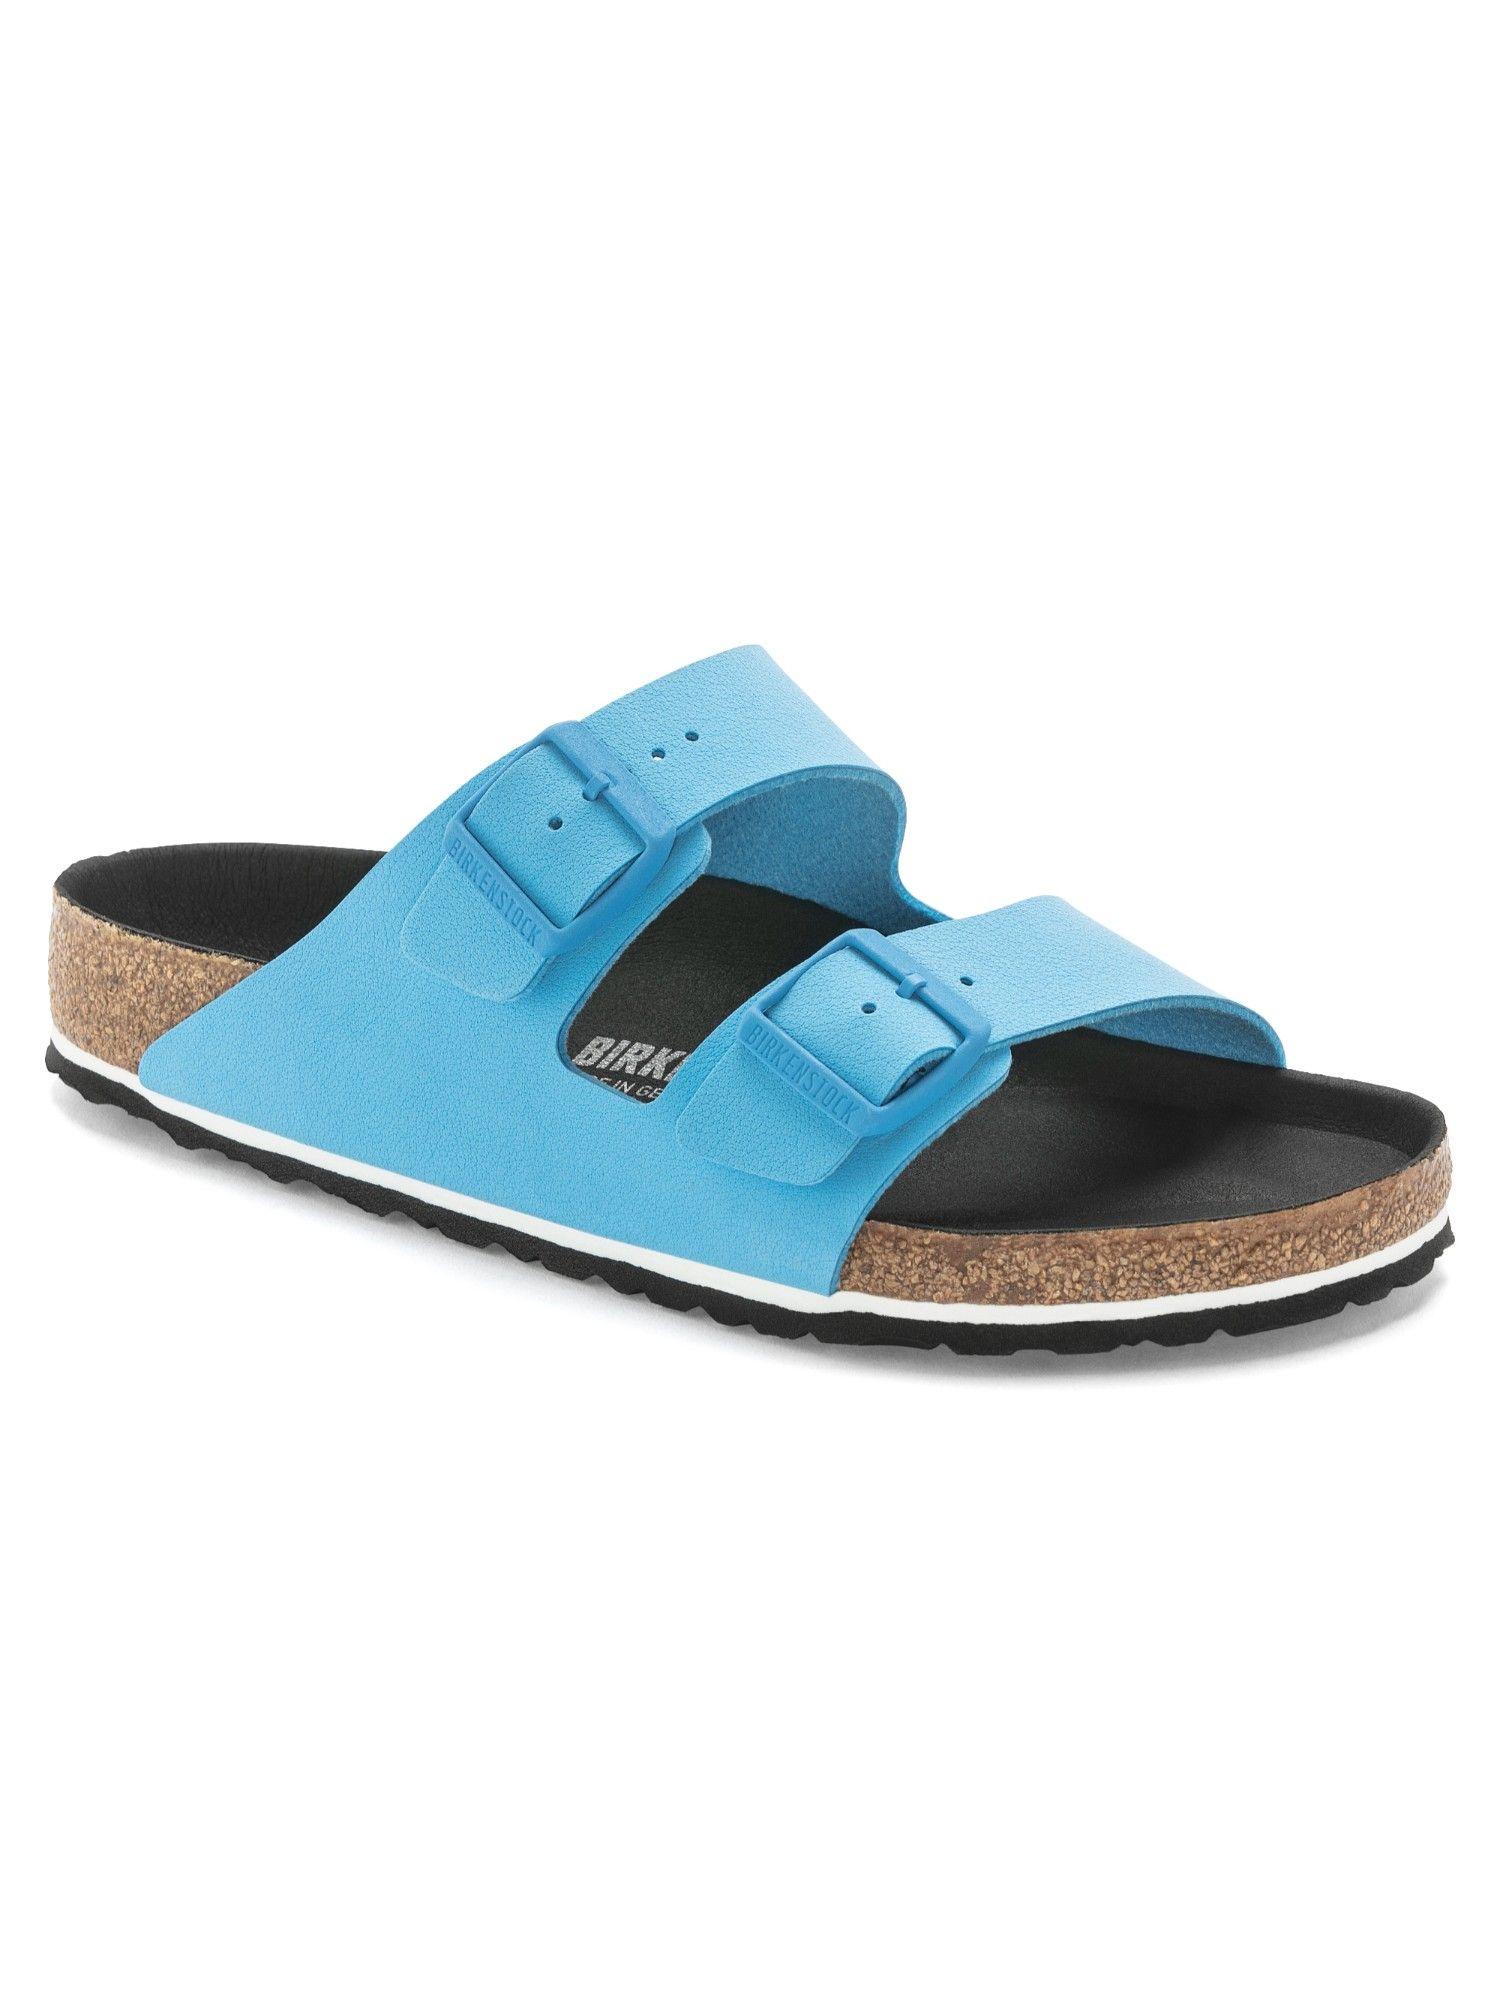 arizona athletic sky blue regular width men two strap sandals